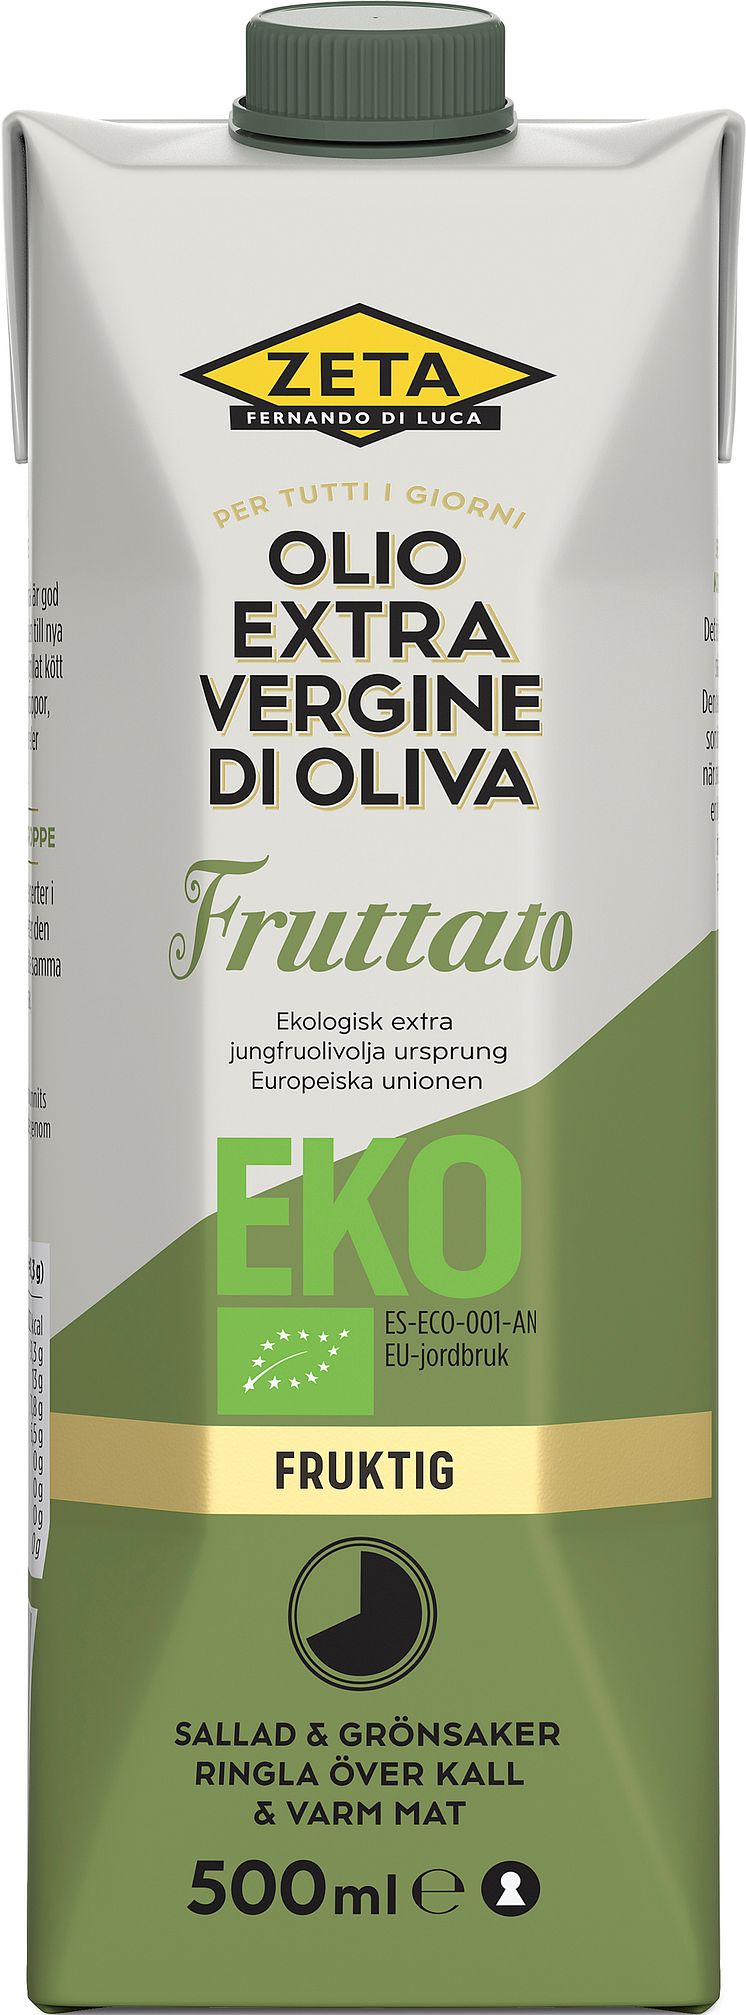 Produktbild Zeta Olivolja Fruttato EKO.jpg